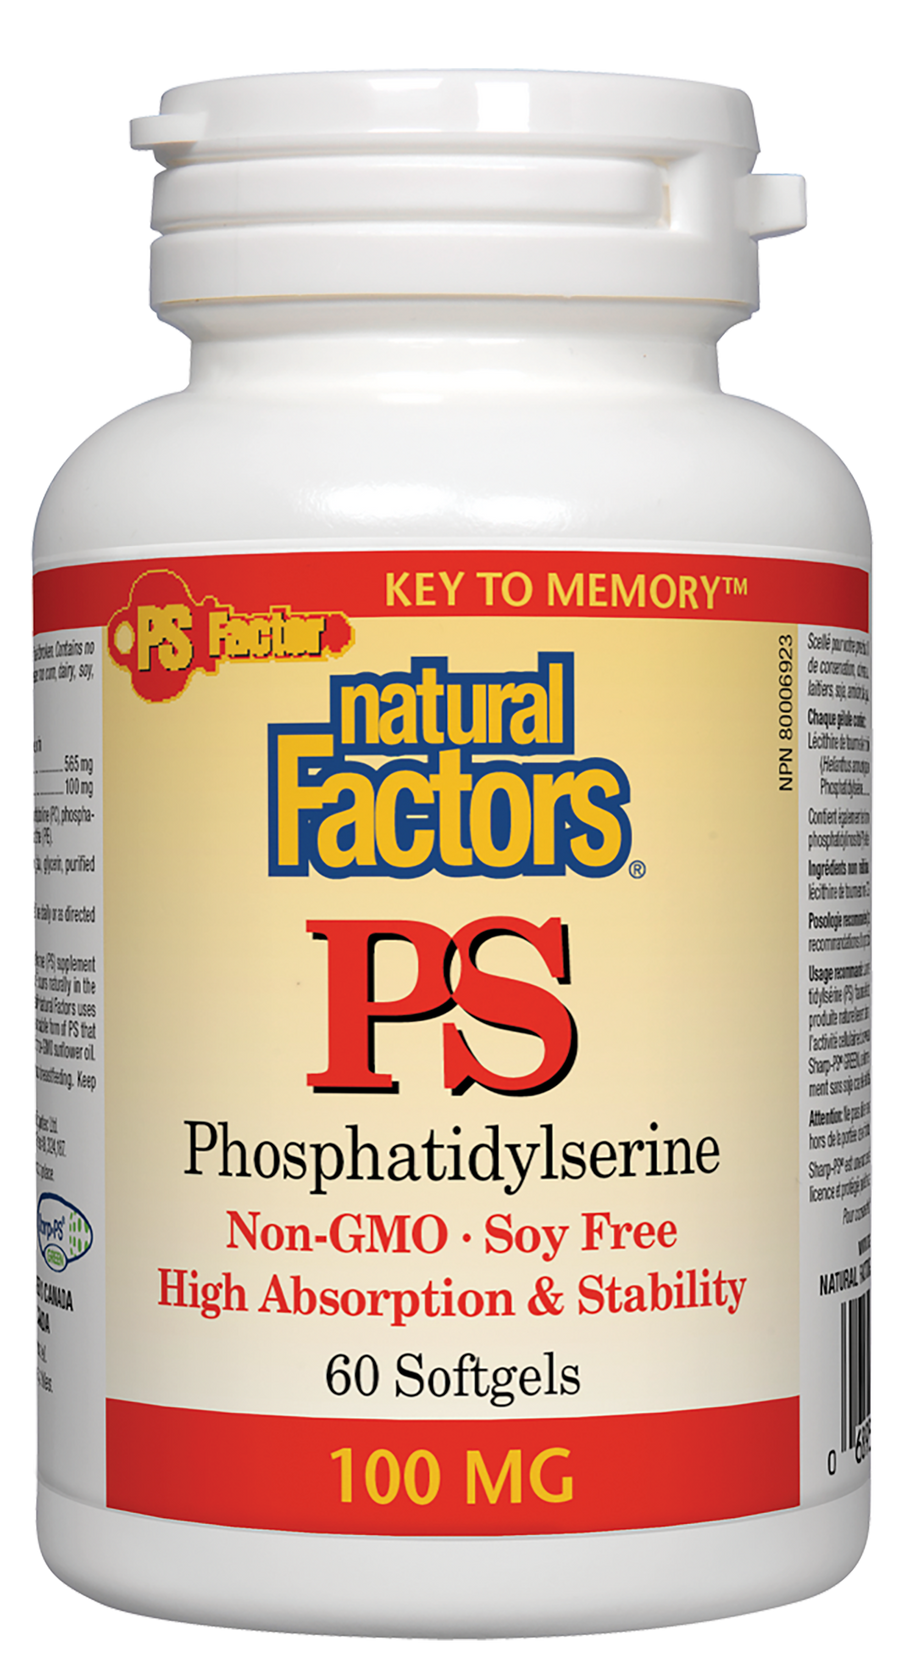 Natural Factors Phosphatidylserine (PS) 100 mg 60 Softgels